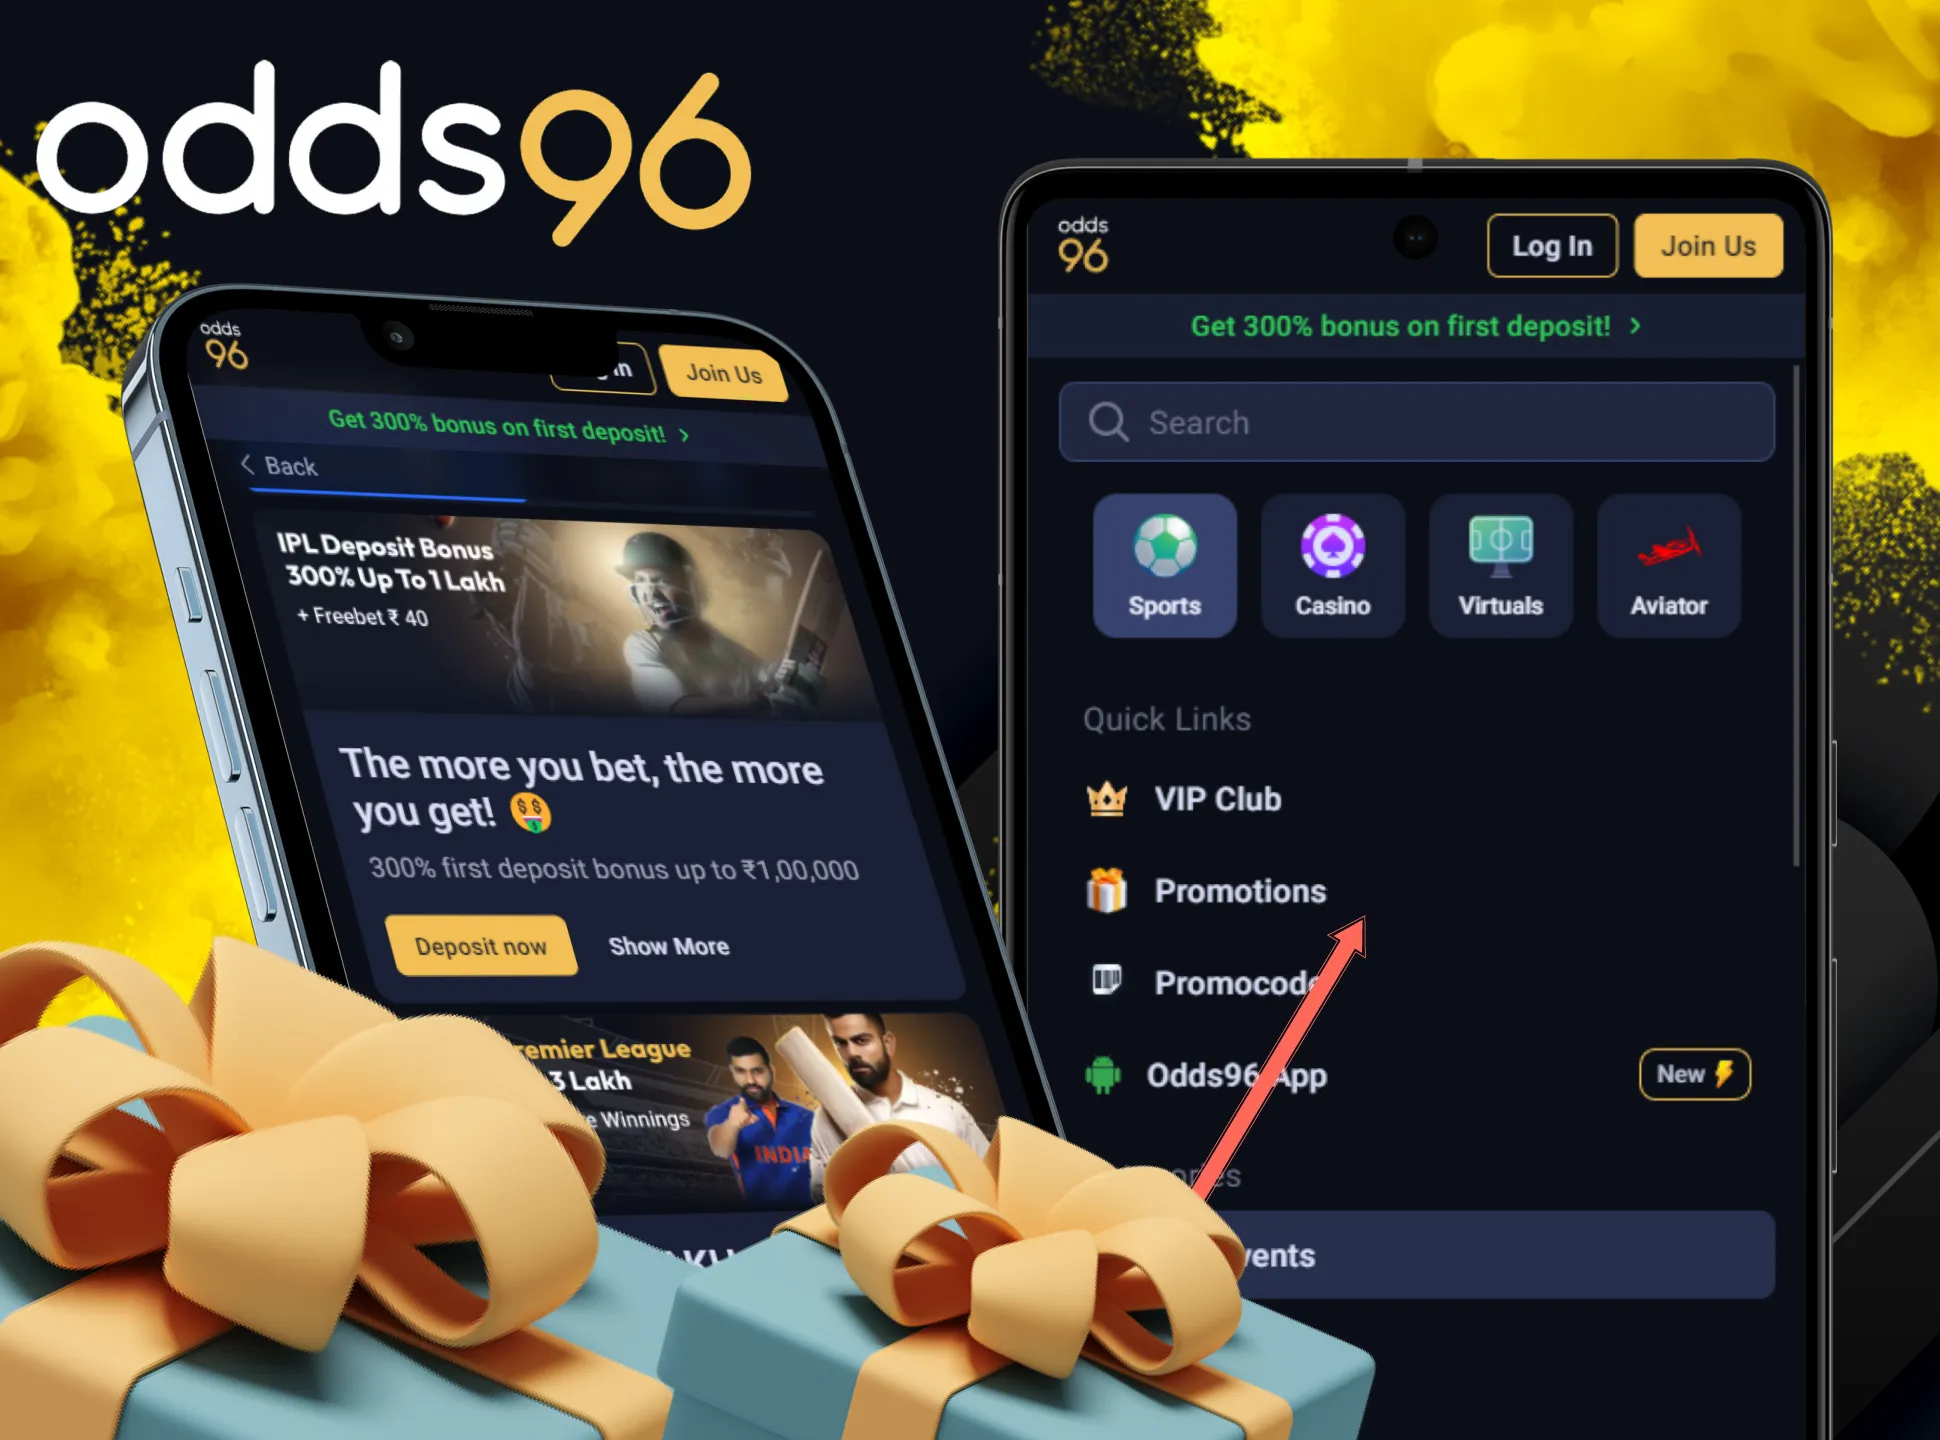 Get your bonuses using Odds96 app.